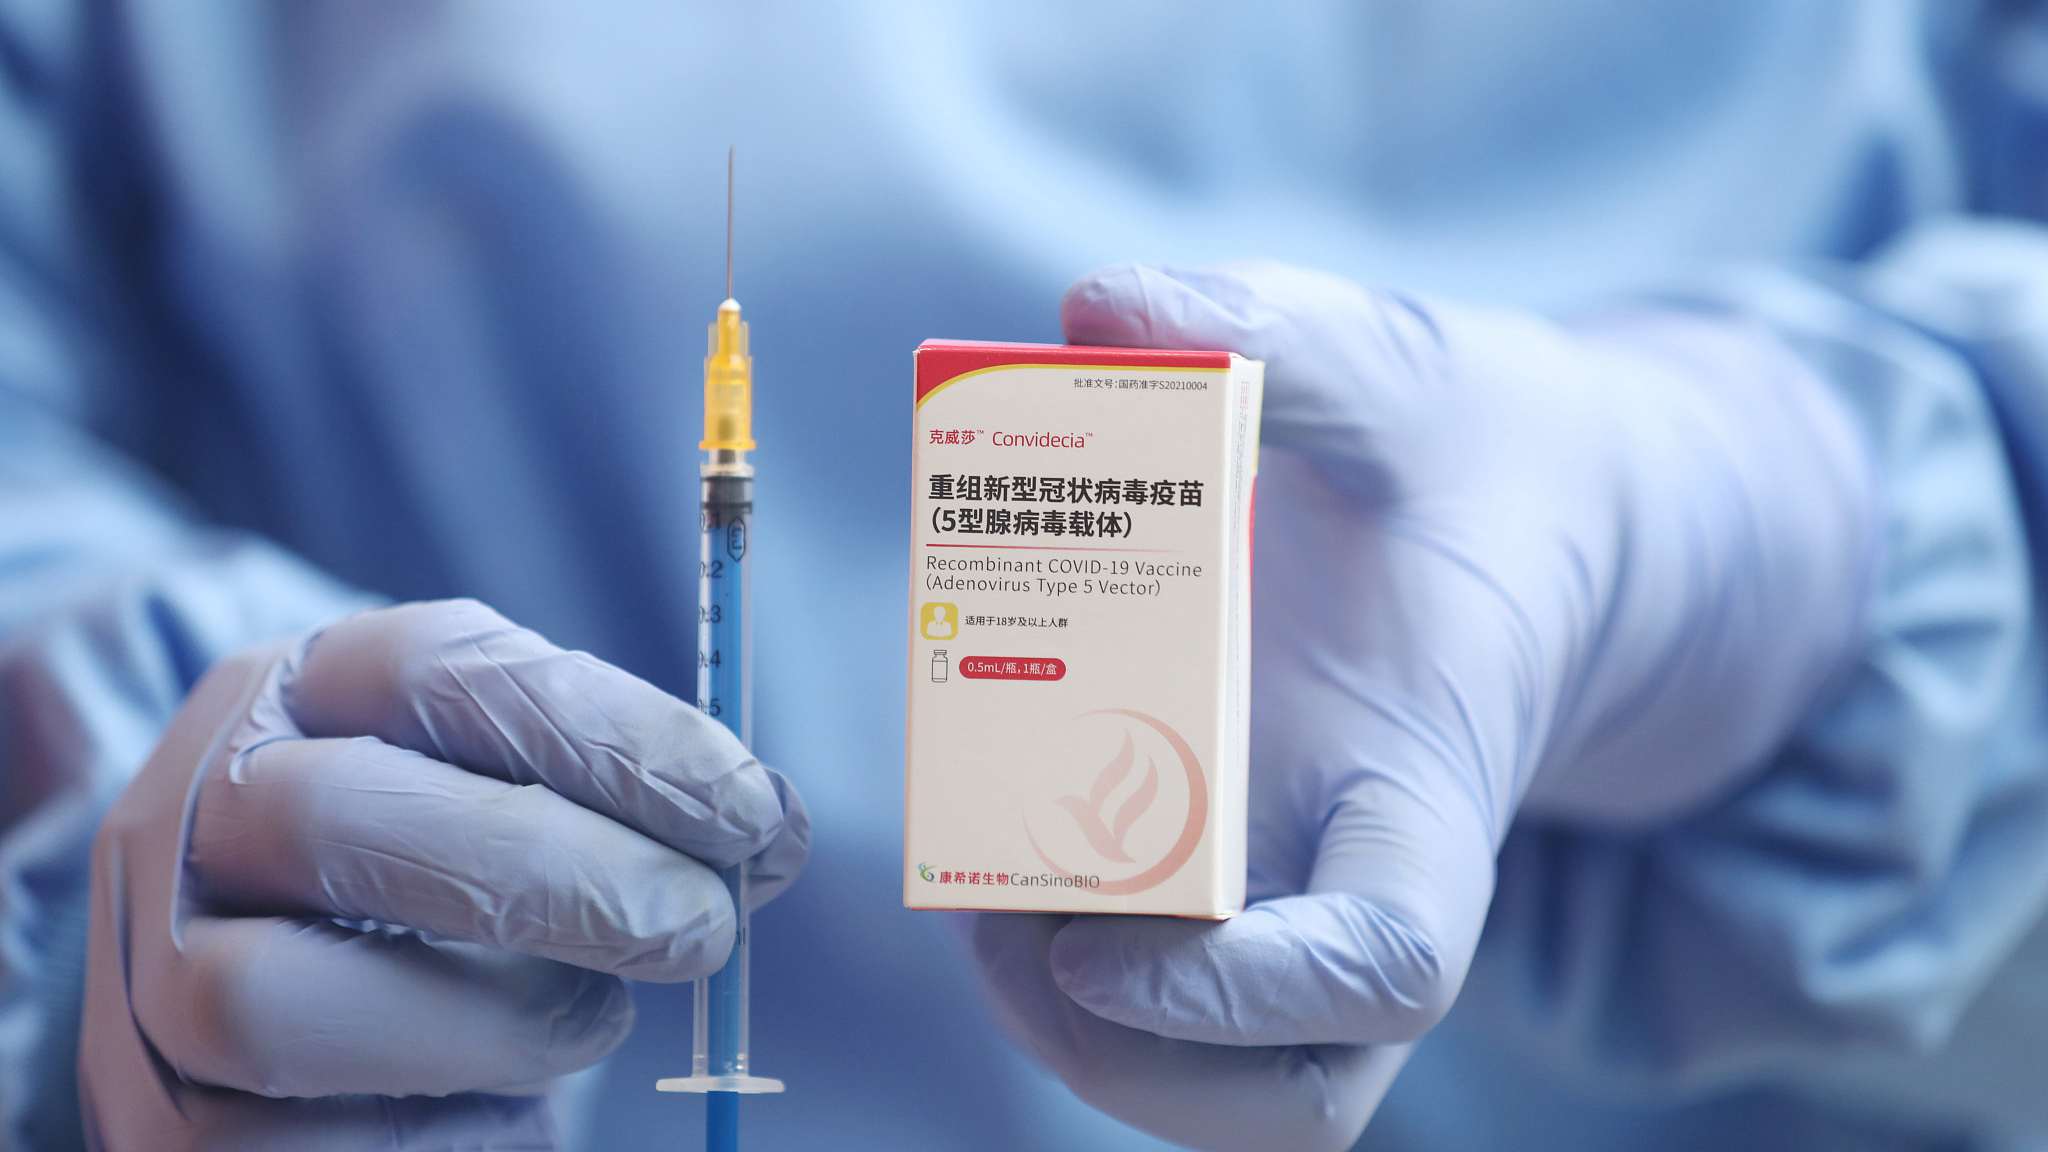 WHO validates China’s Convidecia as 11th vaccine for COVID-19